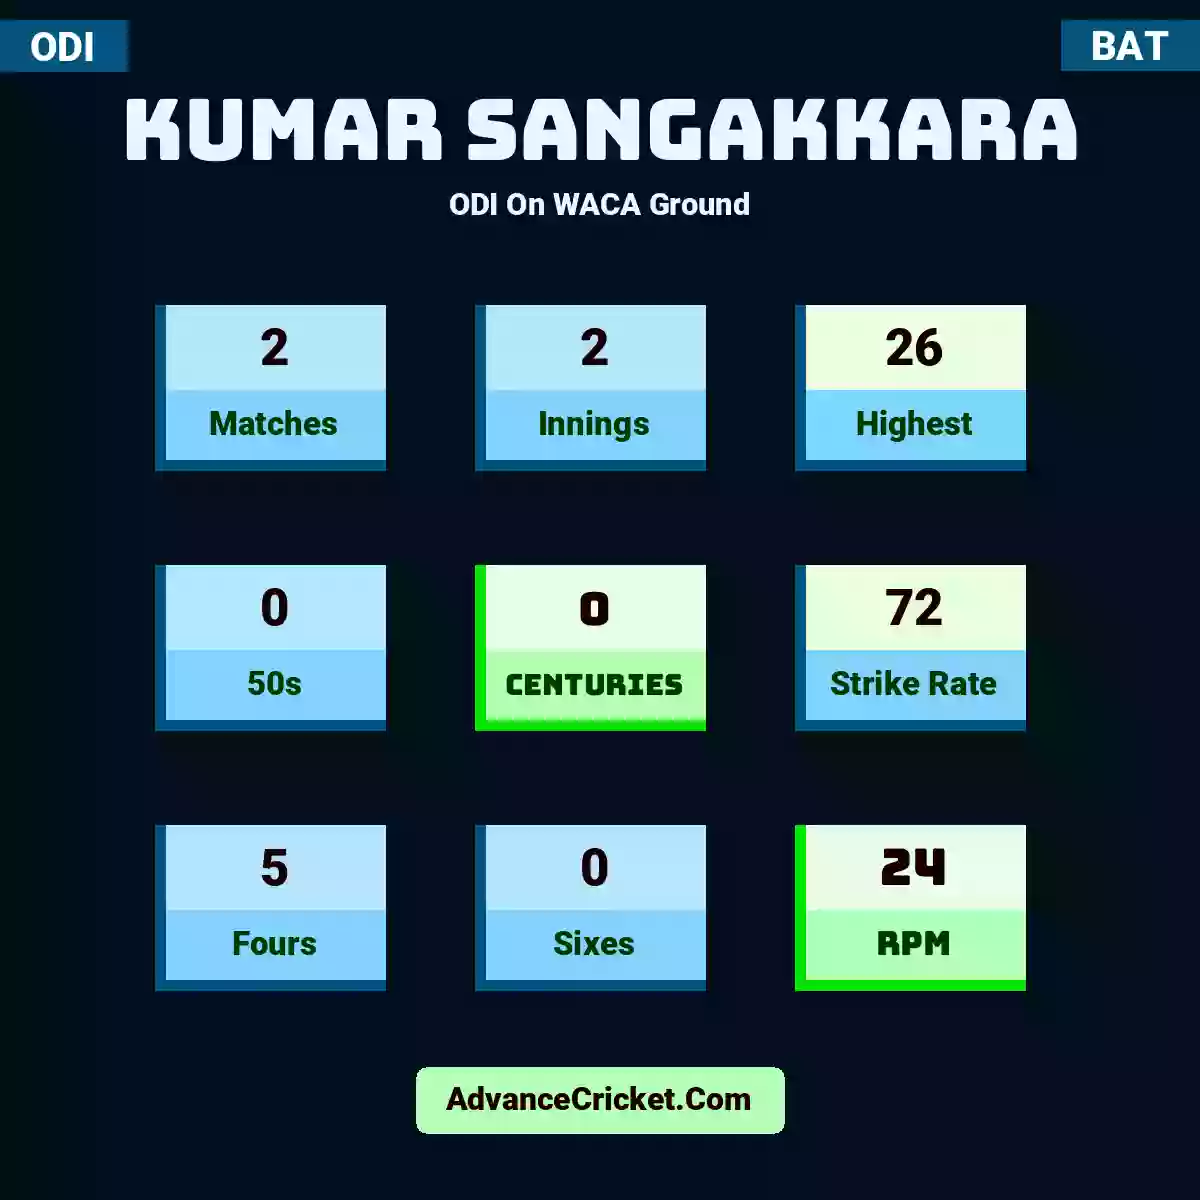 Kumar Sangakkara ODI  On WACA Ground, Kumar Sangakkara played 2 matches, scored 26 runs as highest, 0 half-centuries, and 0 centuries, with a strike rate of 72. K.Sangakkara hit 5 fours and 0 sixes, with an RPM of 24.